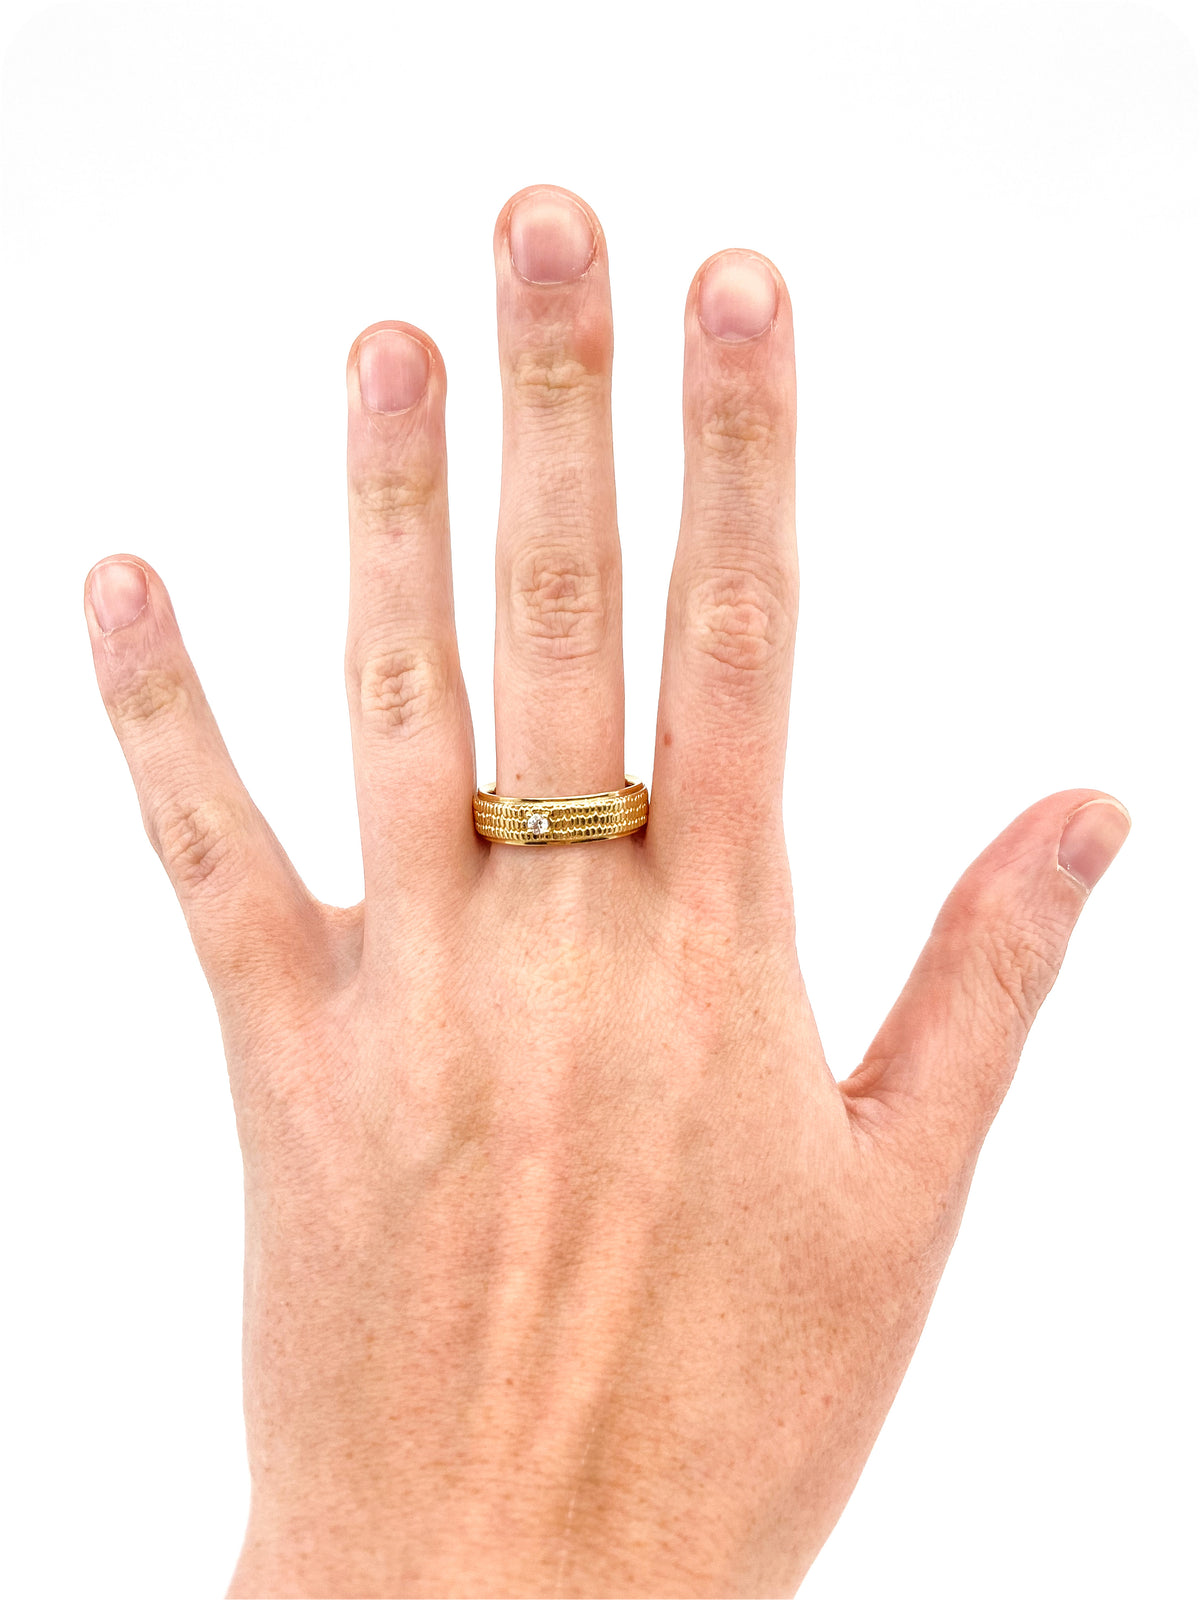 14K Yellow Gold 0.07cttw Canadian Diamond Gents Diamond Ring, size 10